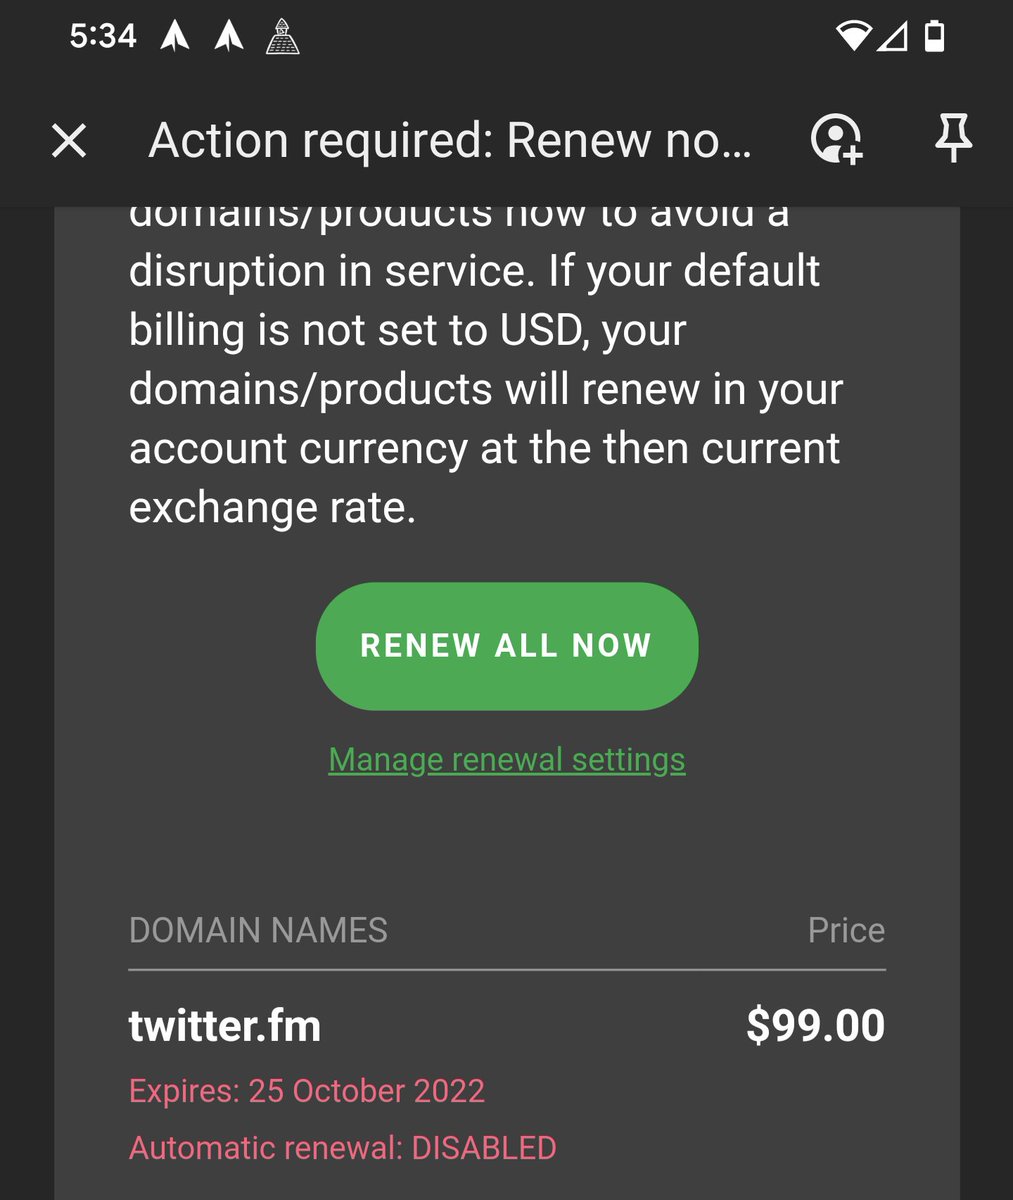 Should I renew my domain twitter.fm?